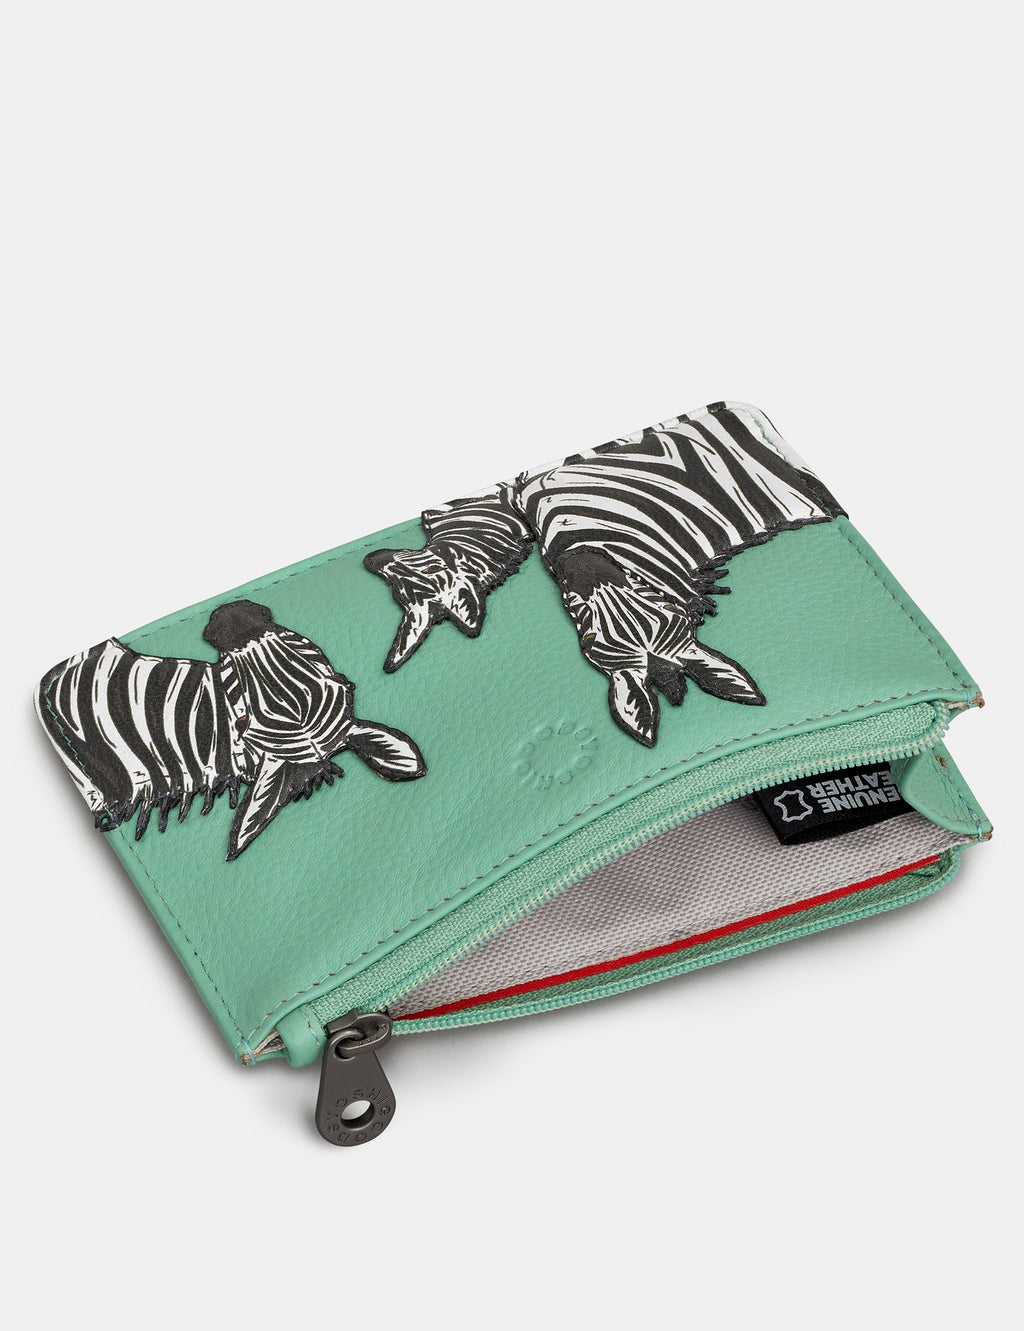 Yoshi - Mint Green Zebra Zip Top Purse RFID